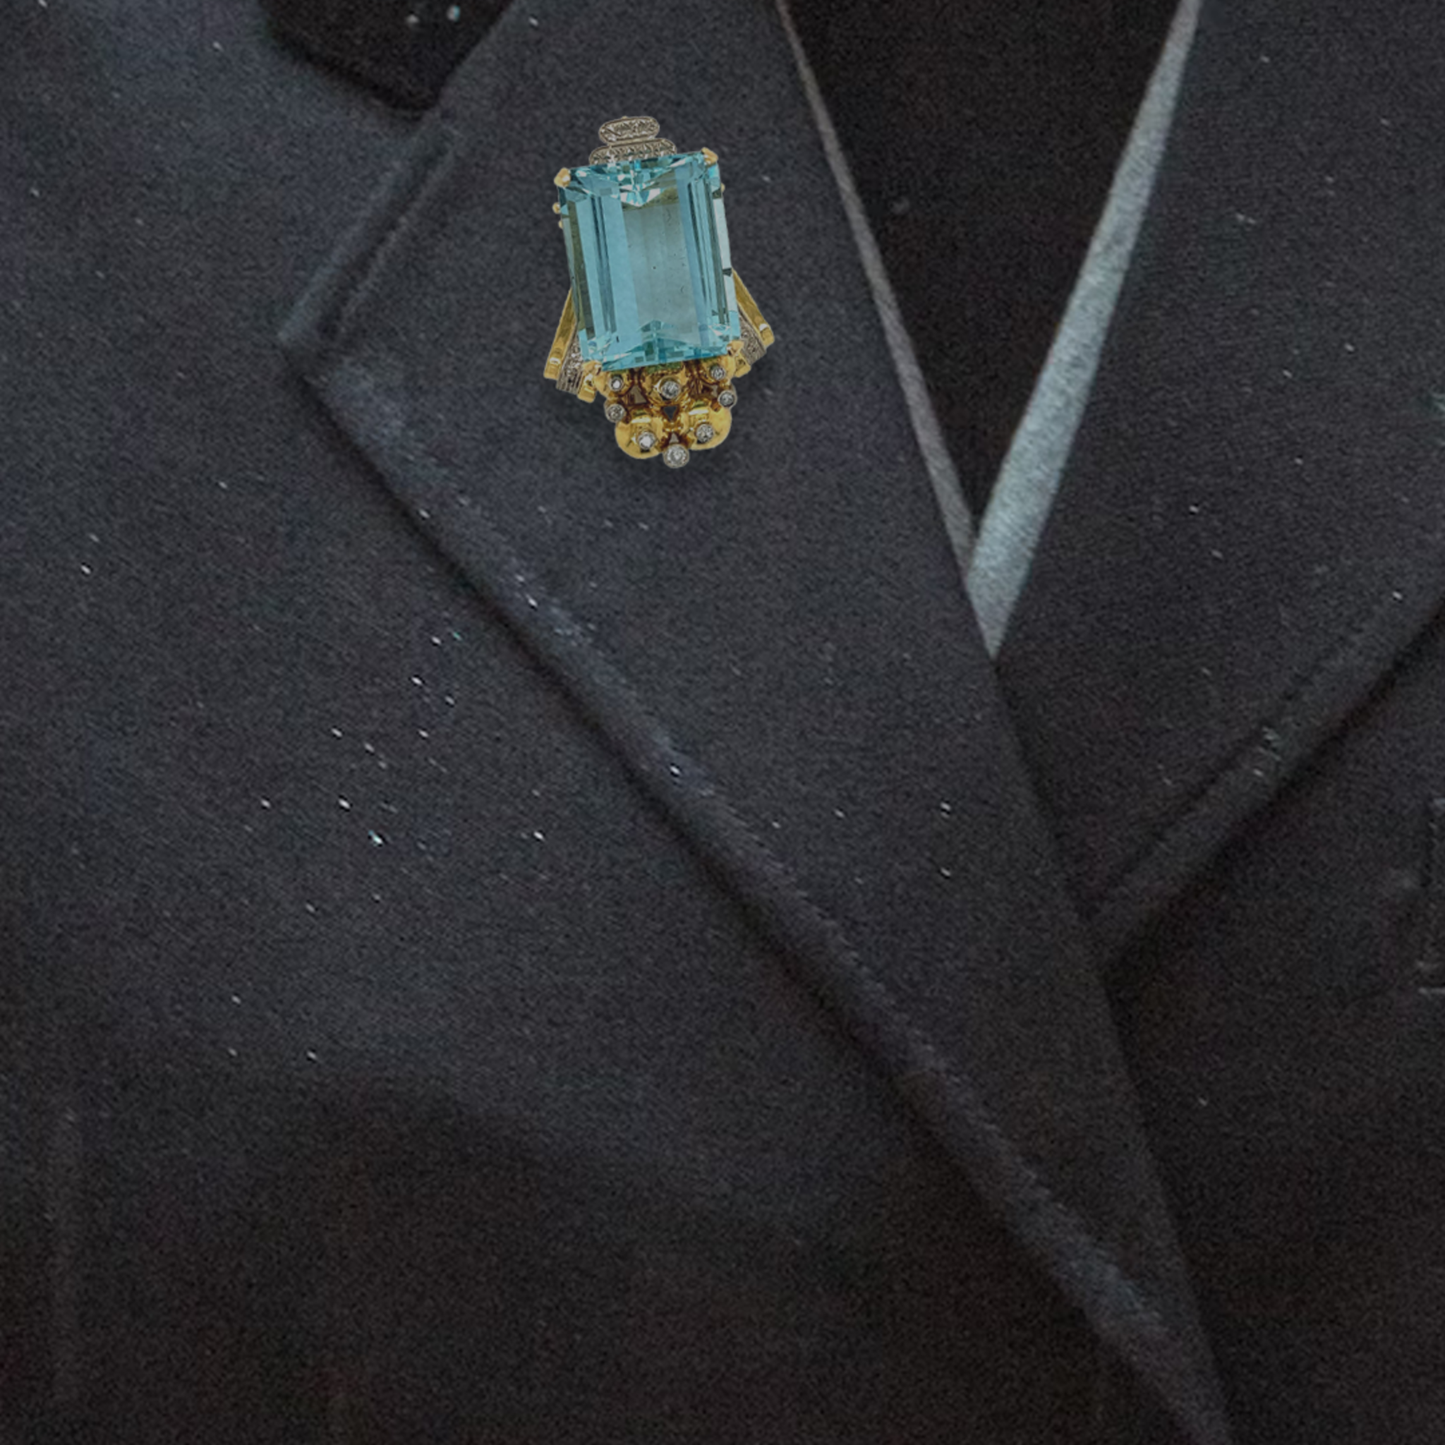 Retro 18KT Yellow Gold Aquamarine & Diamond Brooch worn on blazer